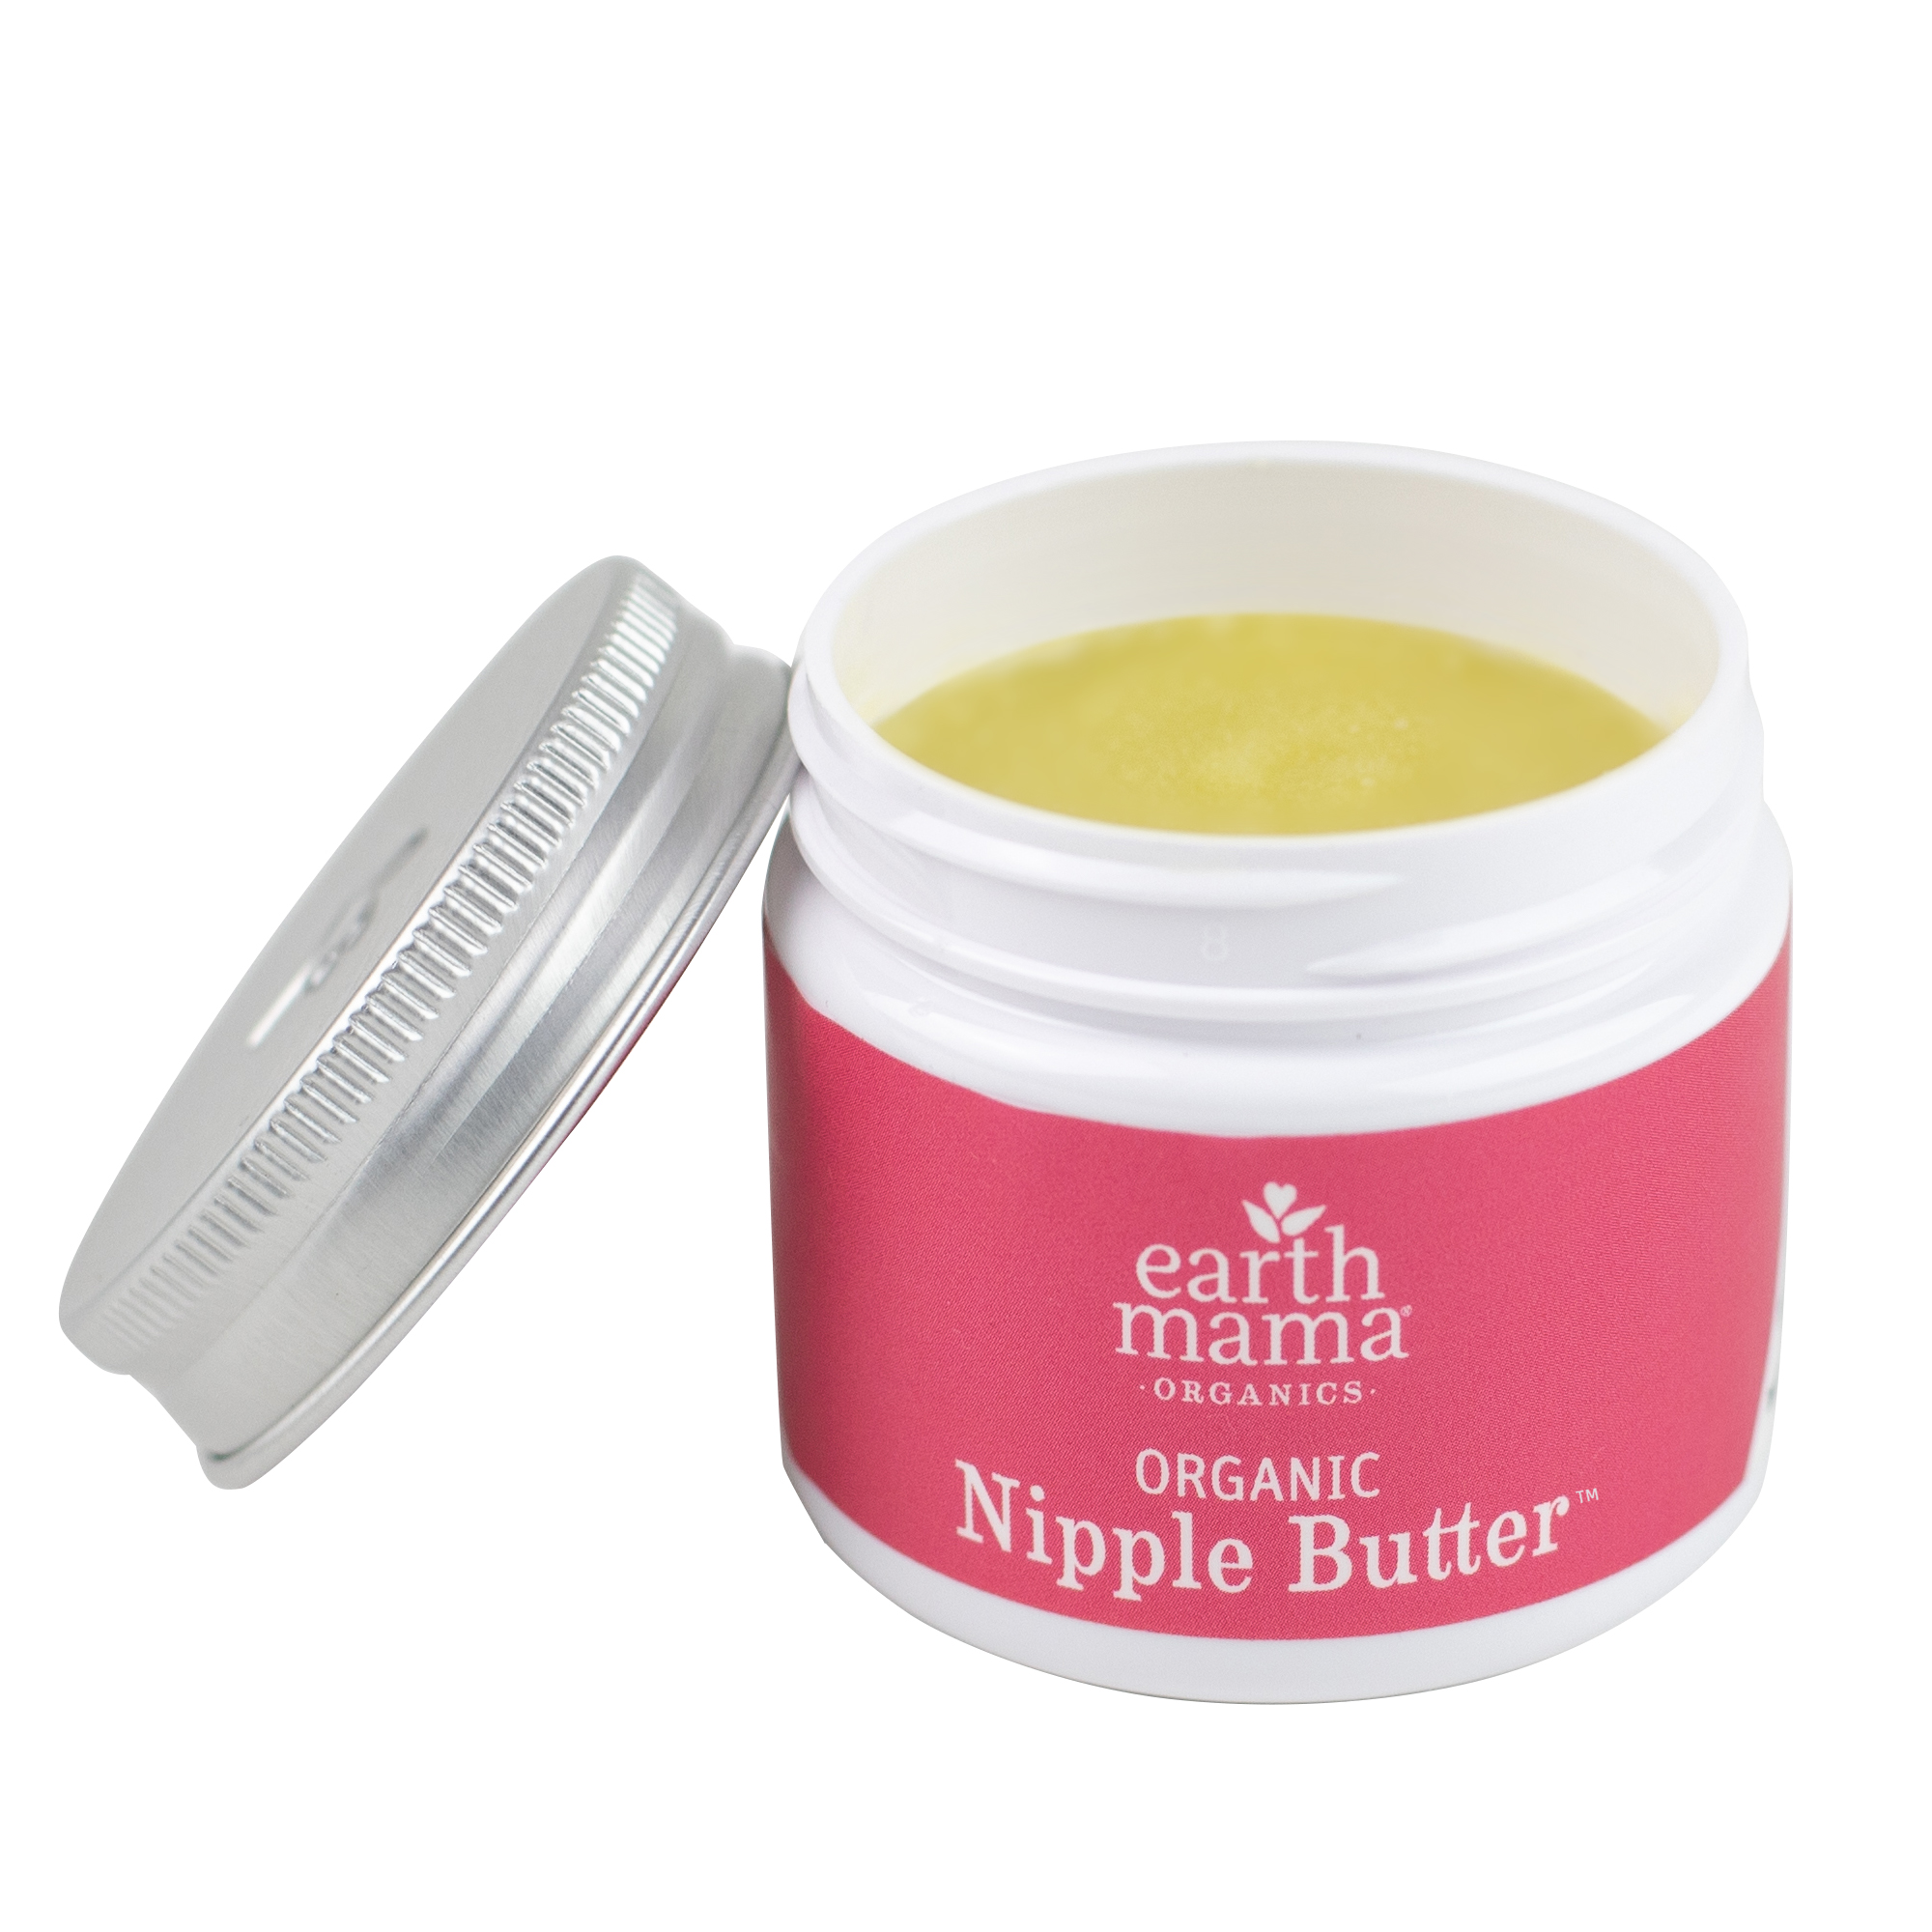 Earth Mama Organic Nipple Butter™, 2 fl oz - image 1 of 11